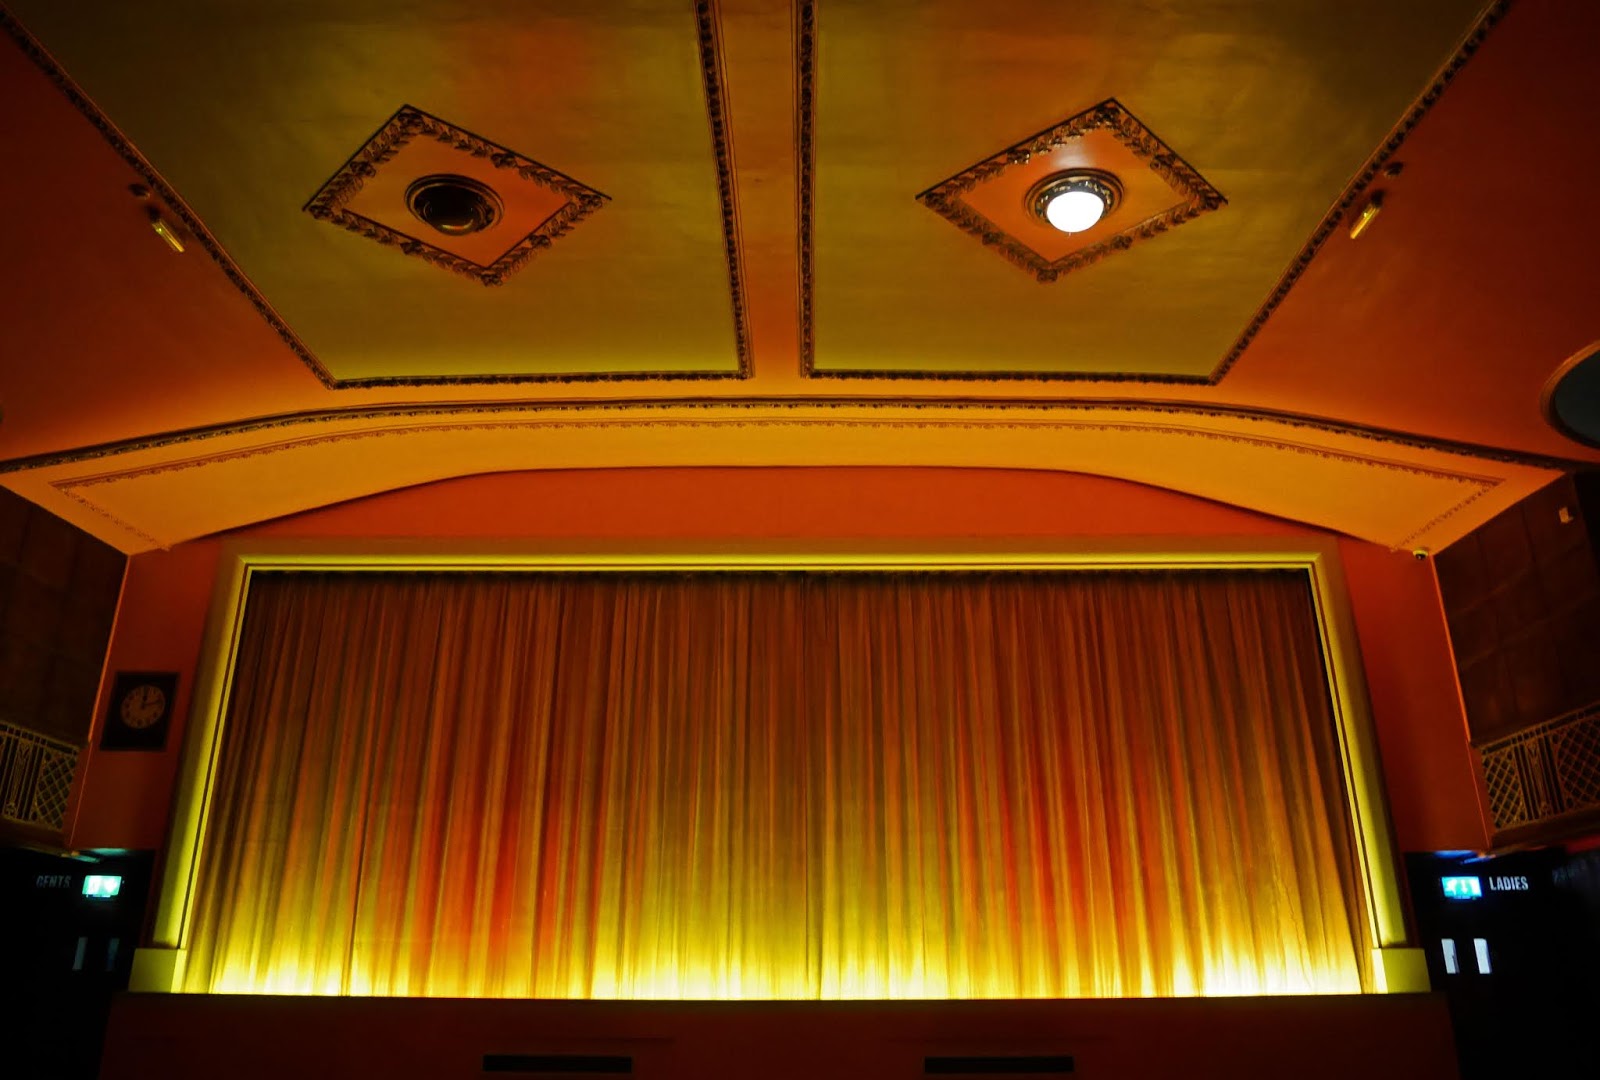 The Dome Cinema's massive screen, Worthing